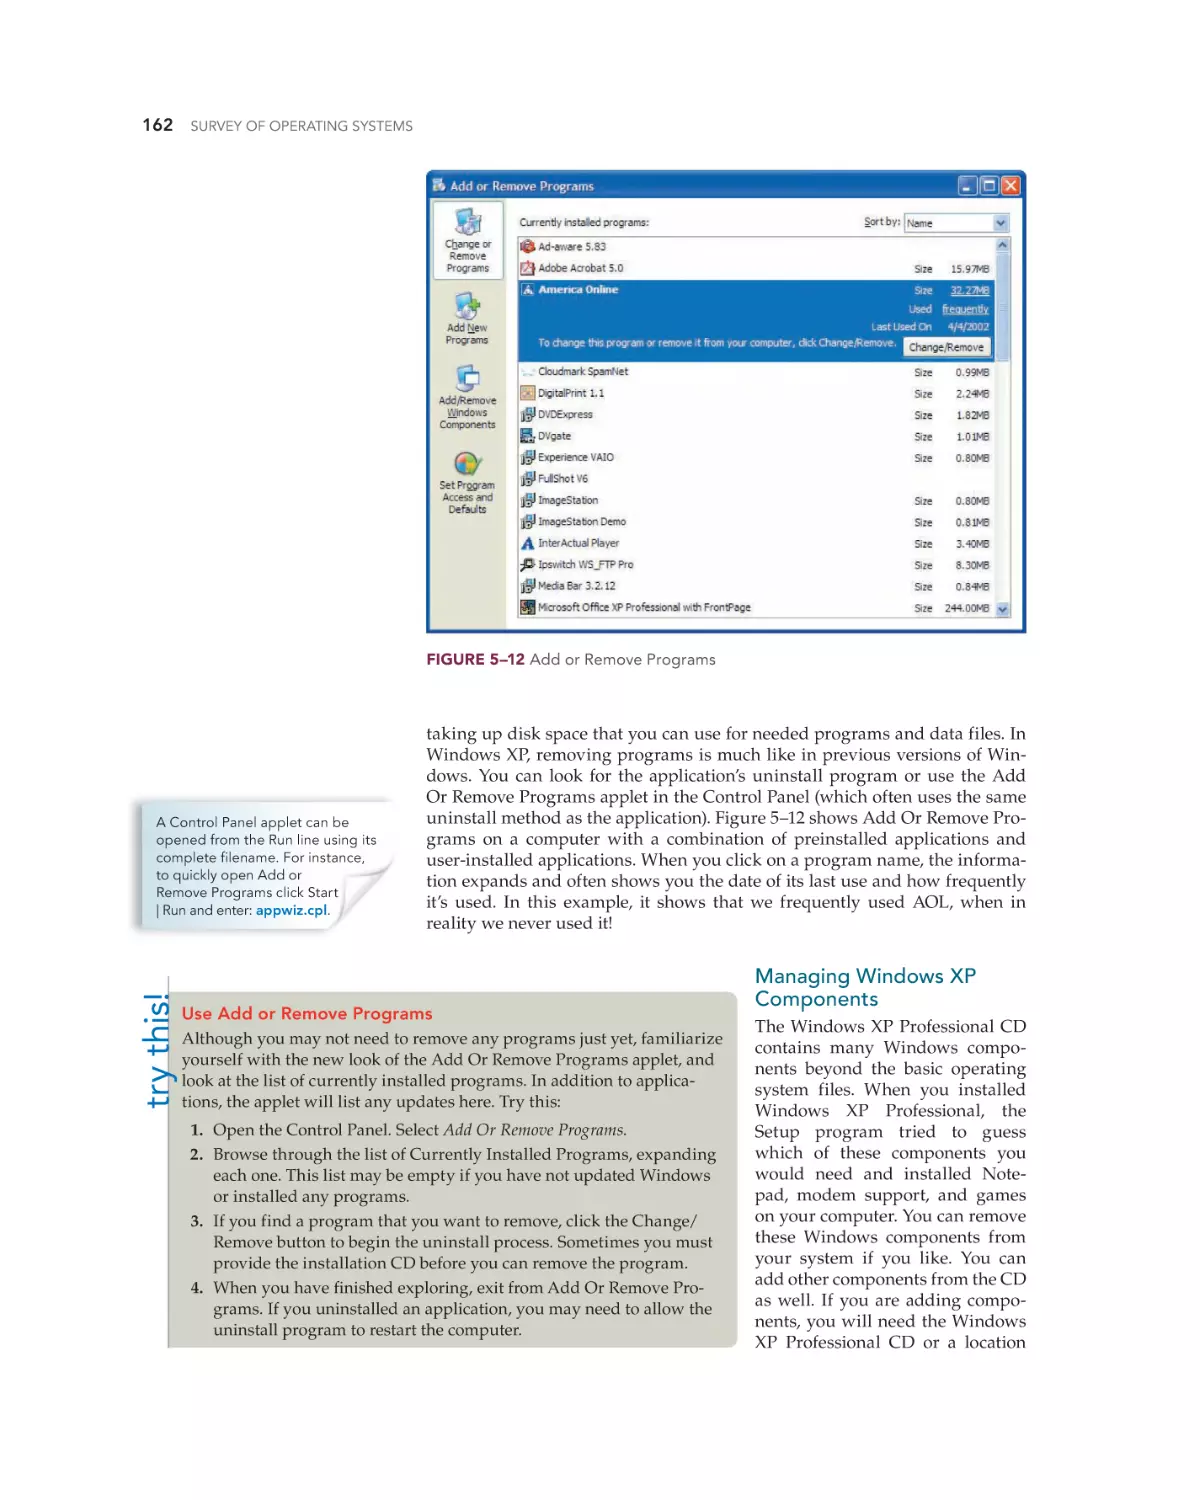 Managing Windows XP Components